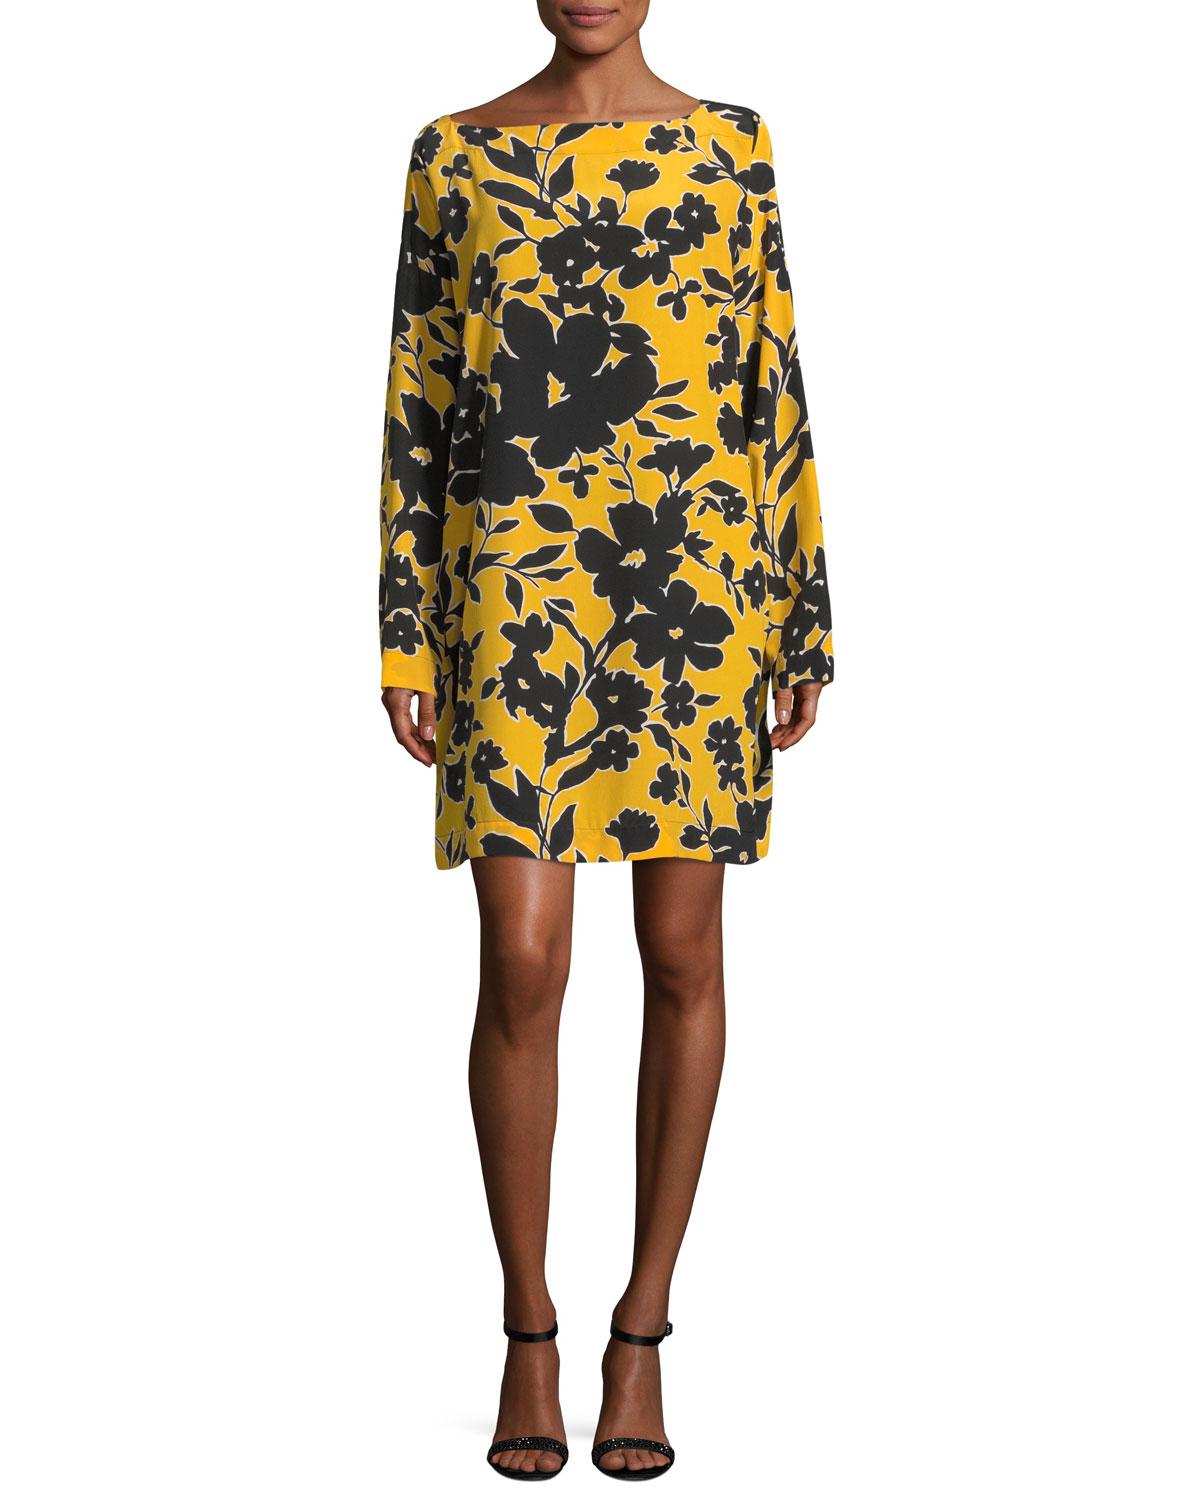 Lyst - Michael Kors Bateau-neck Tropical Floral-print Silk Dress in Yellow